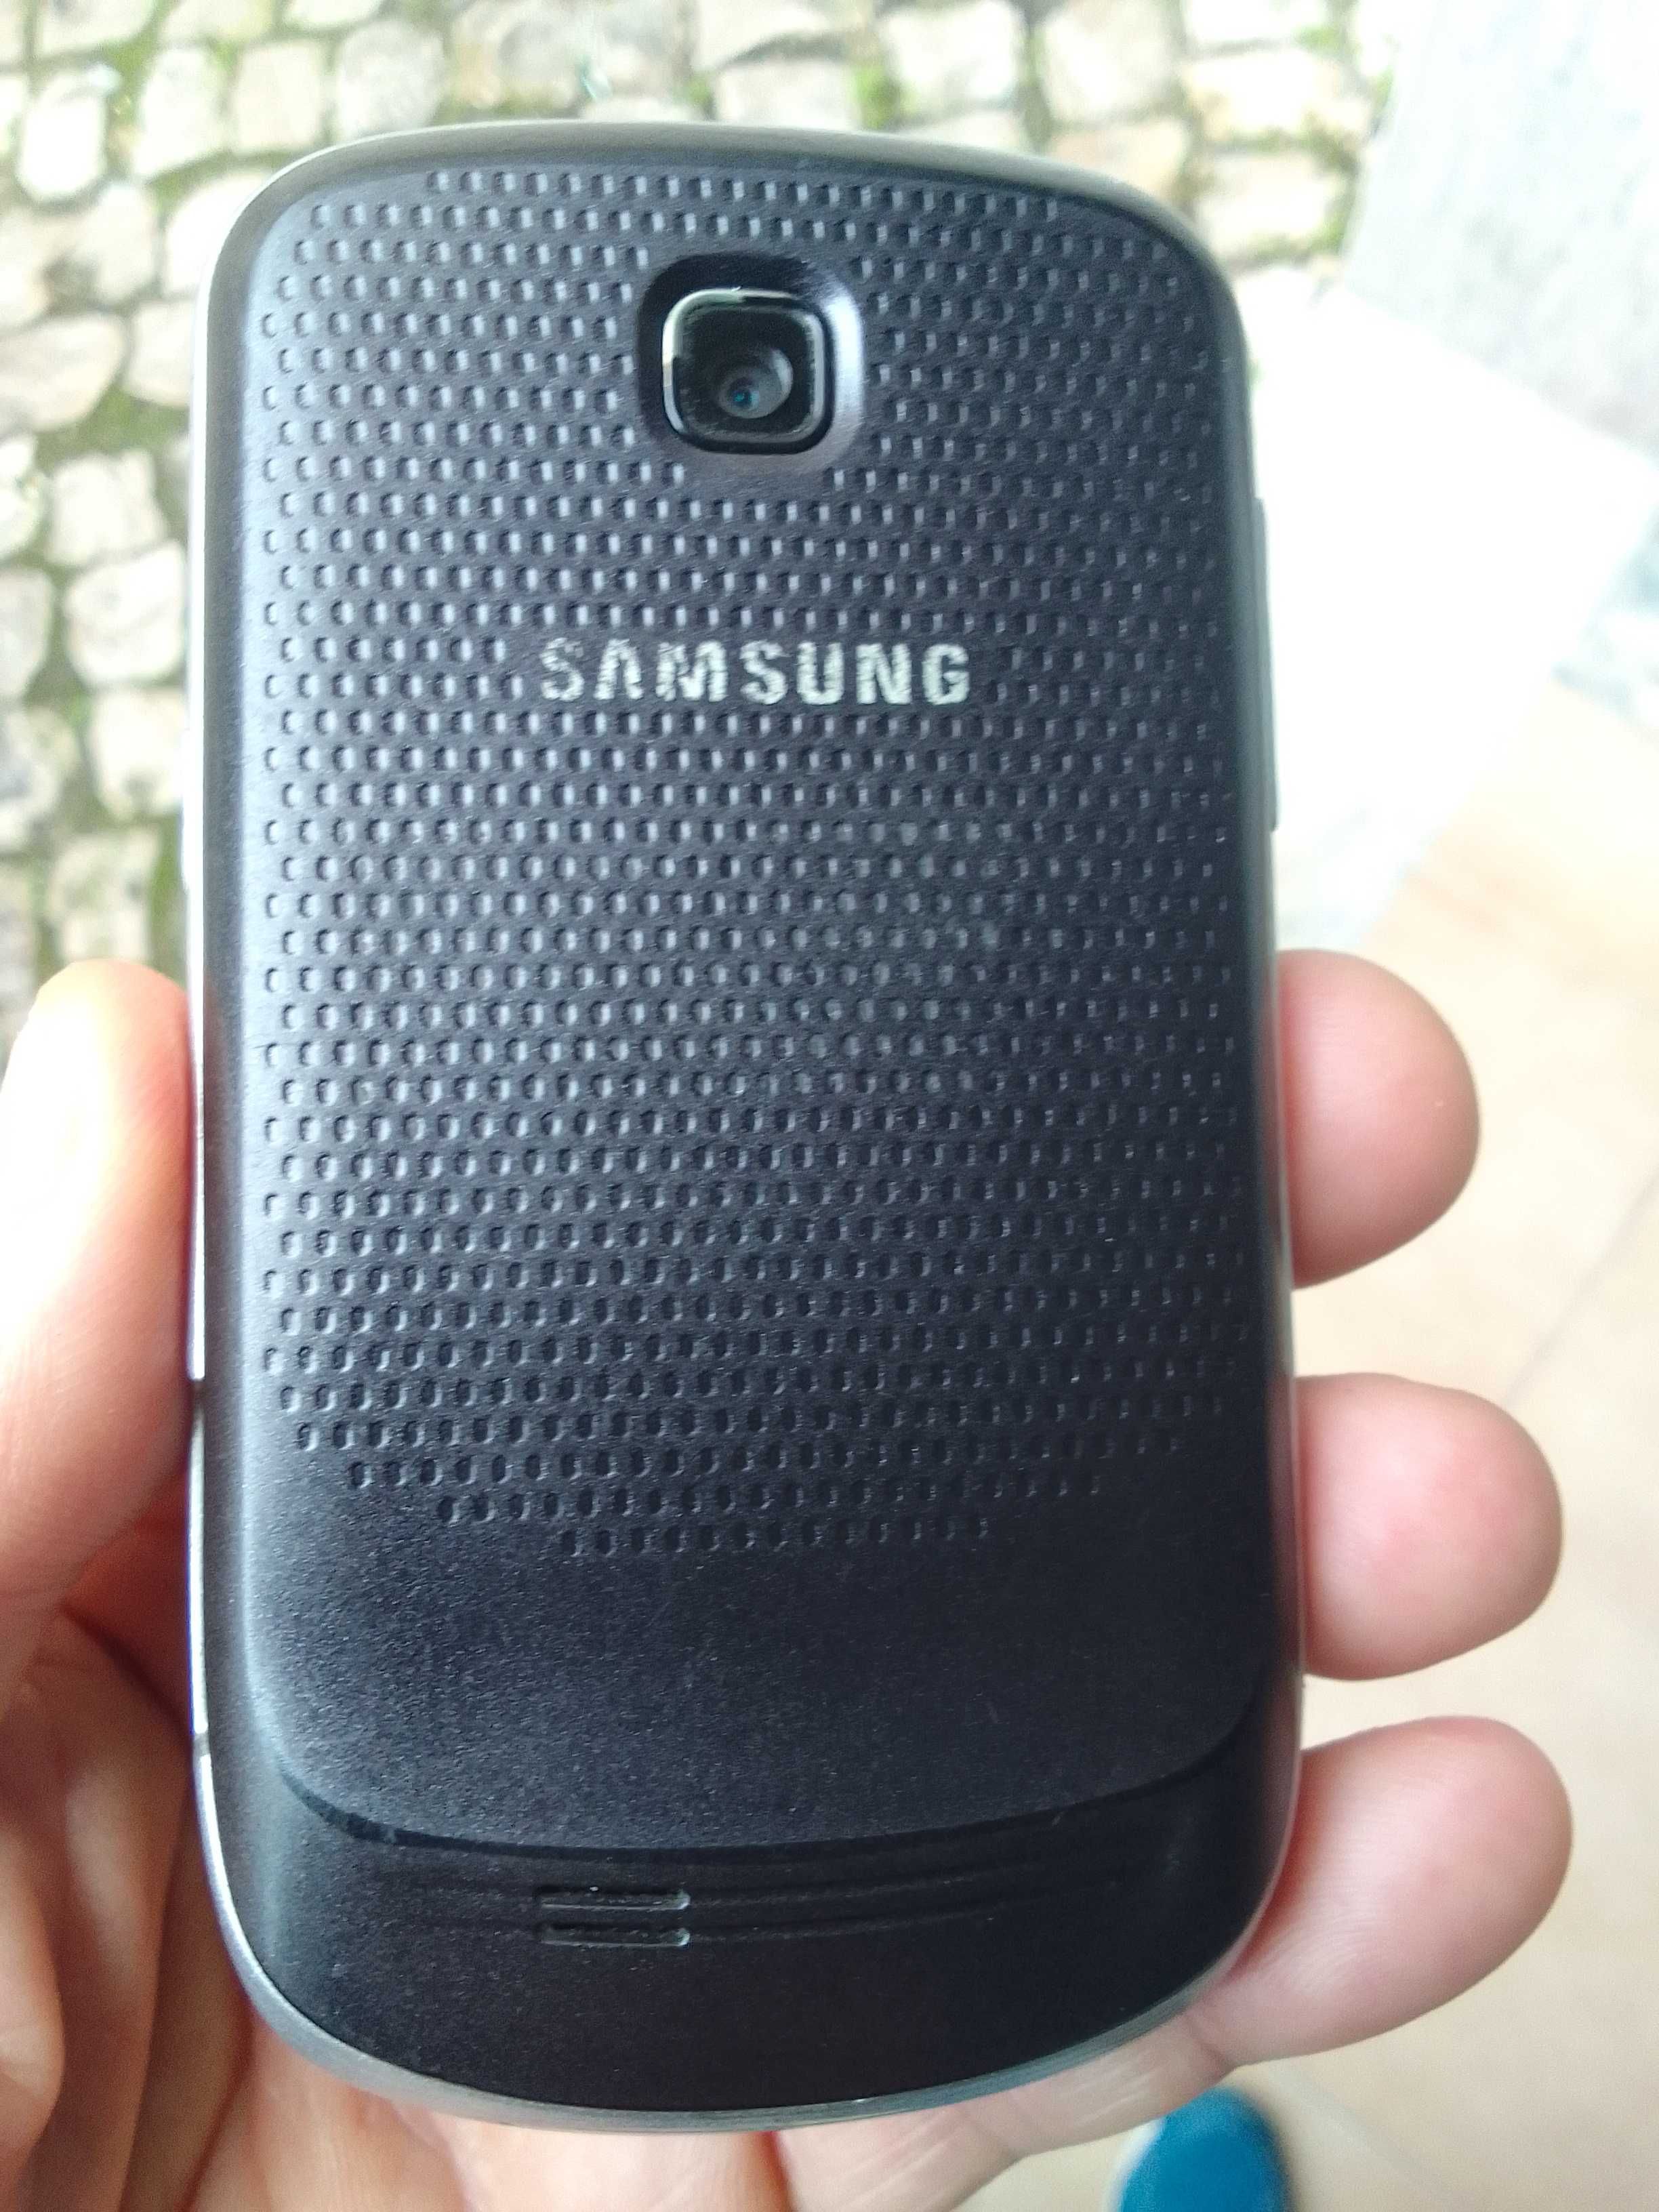 Telemóvel Samsung Galaxy Mini, Estimado